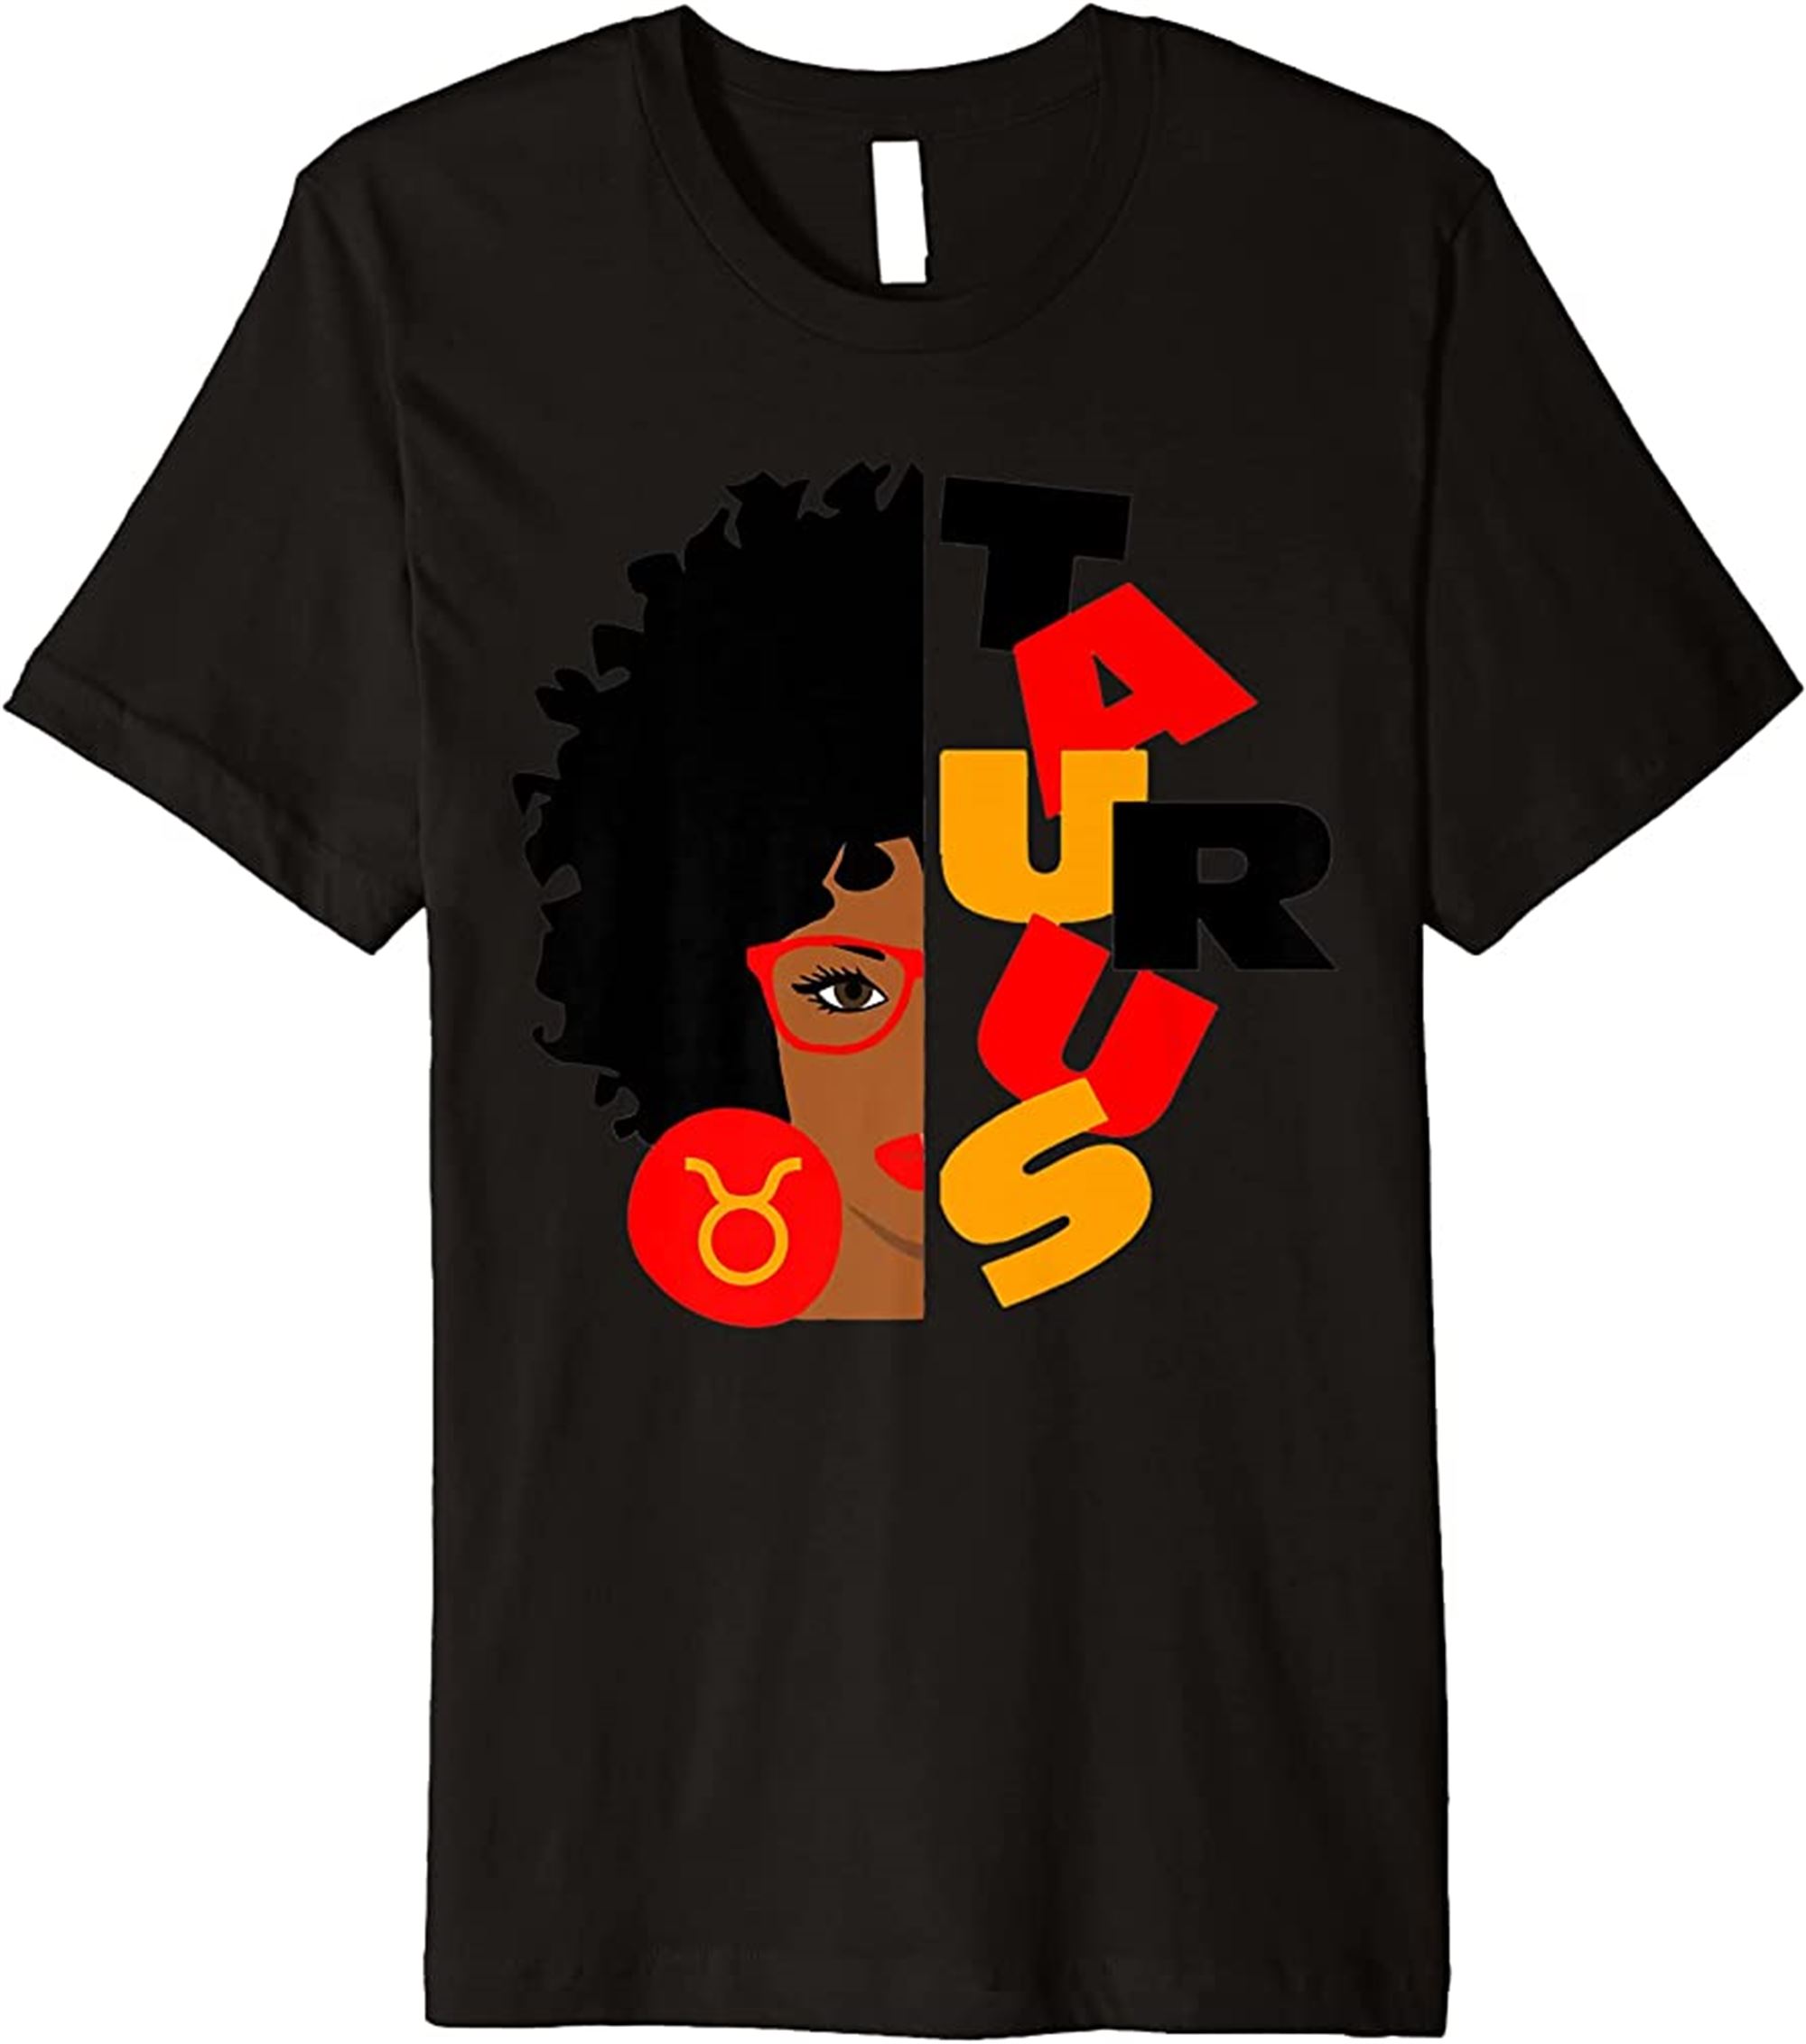 Taurus Girl Africa Girl Zodiac Signs Birthday Premium T-shirt Full Size Up To 5xl